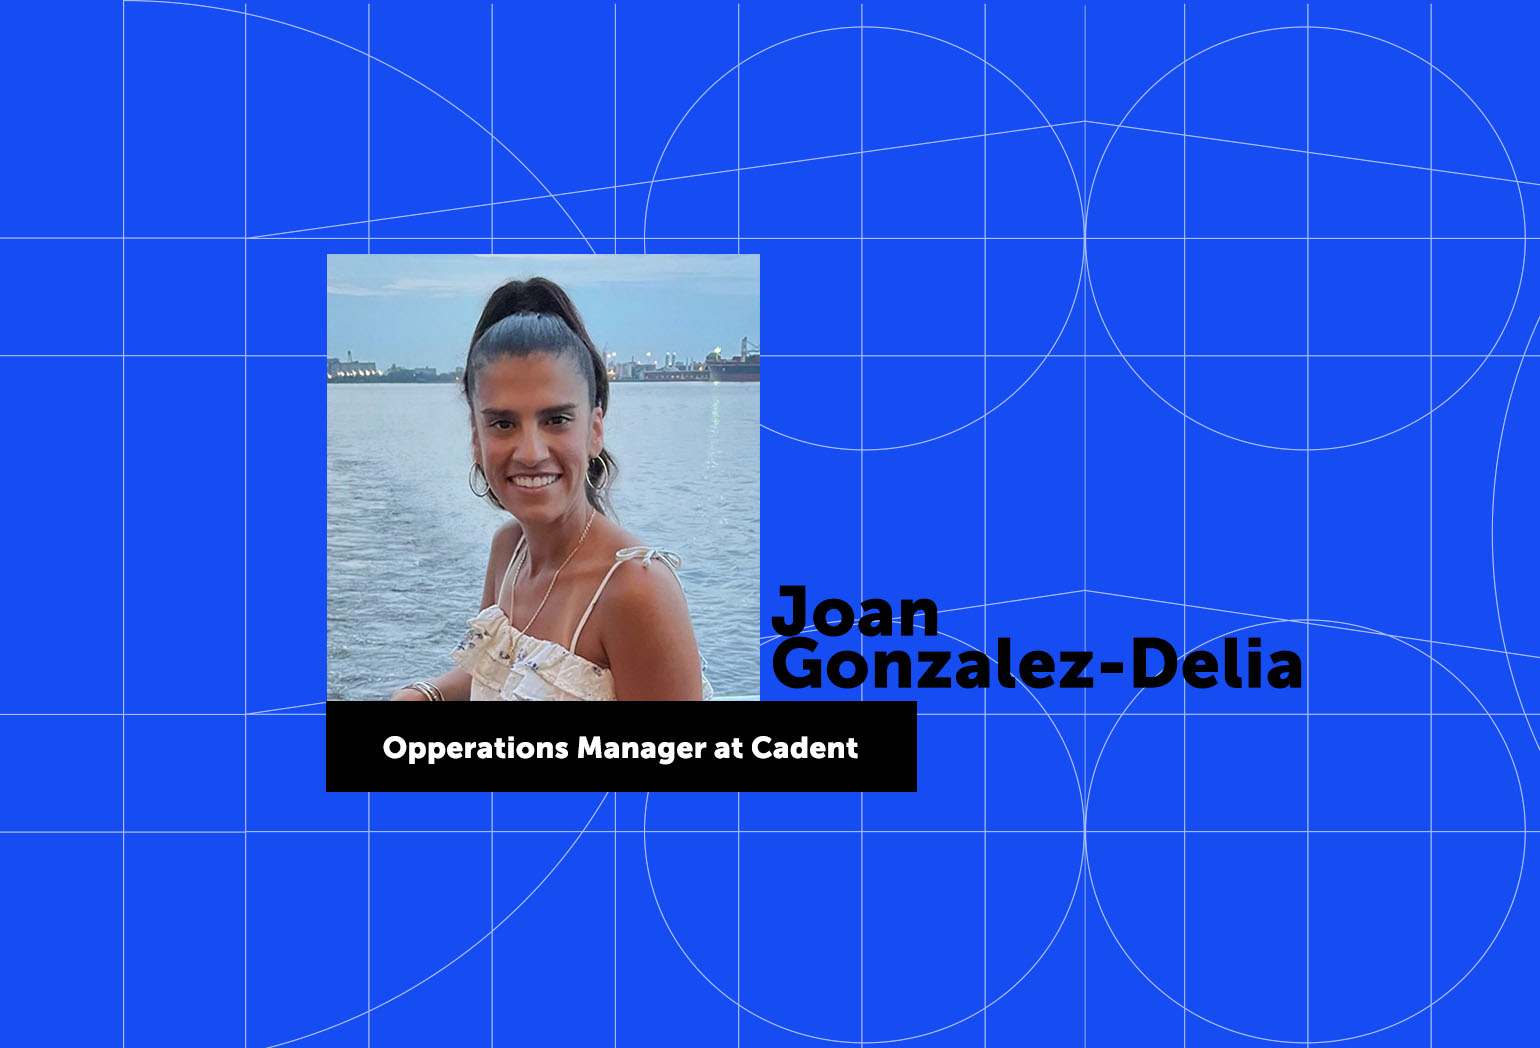 Hispanic Heritage Month at Cadent: Joan Gonzalez-Delia